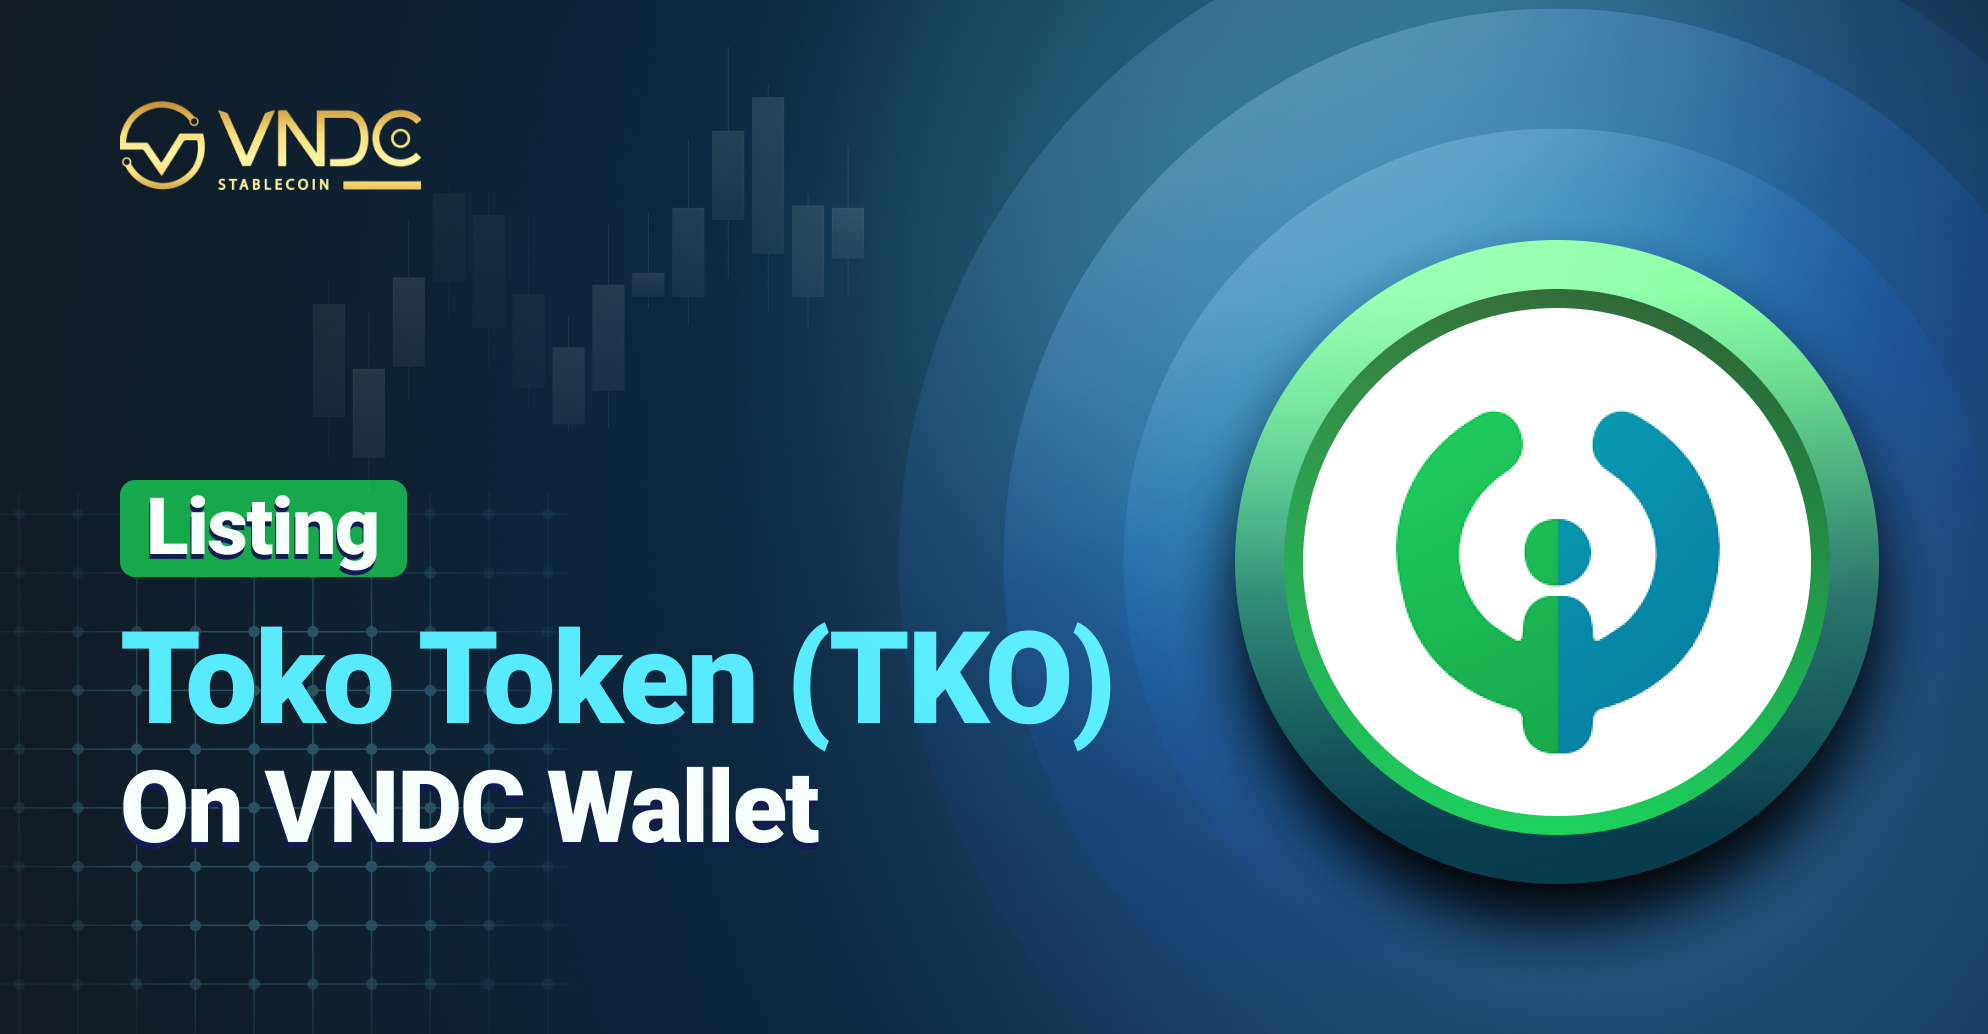 Listing Toko Token (TKO) on VNDC Wallet